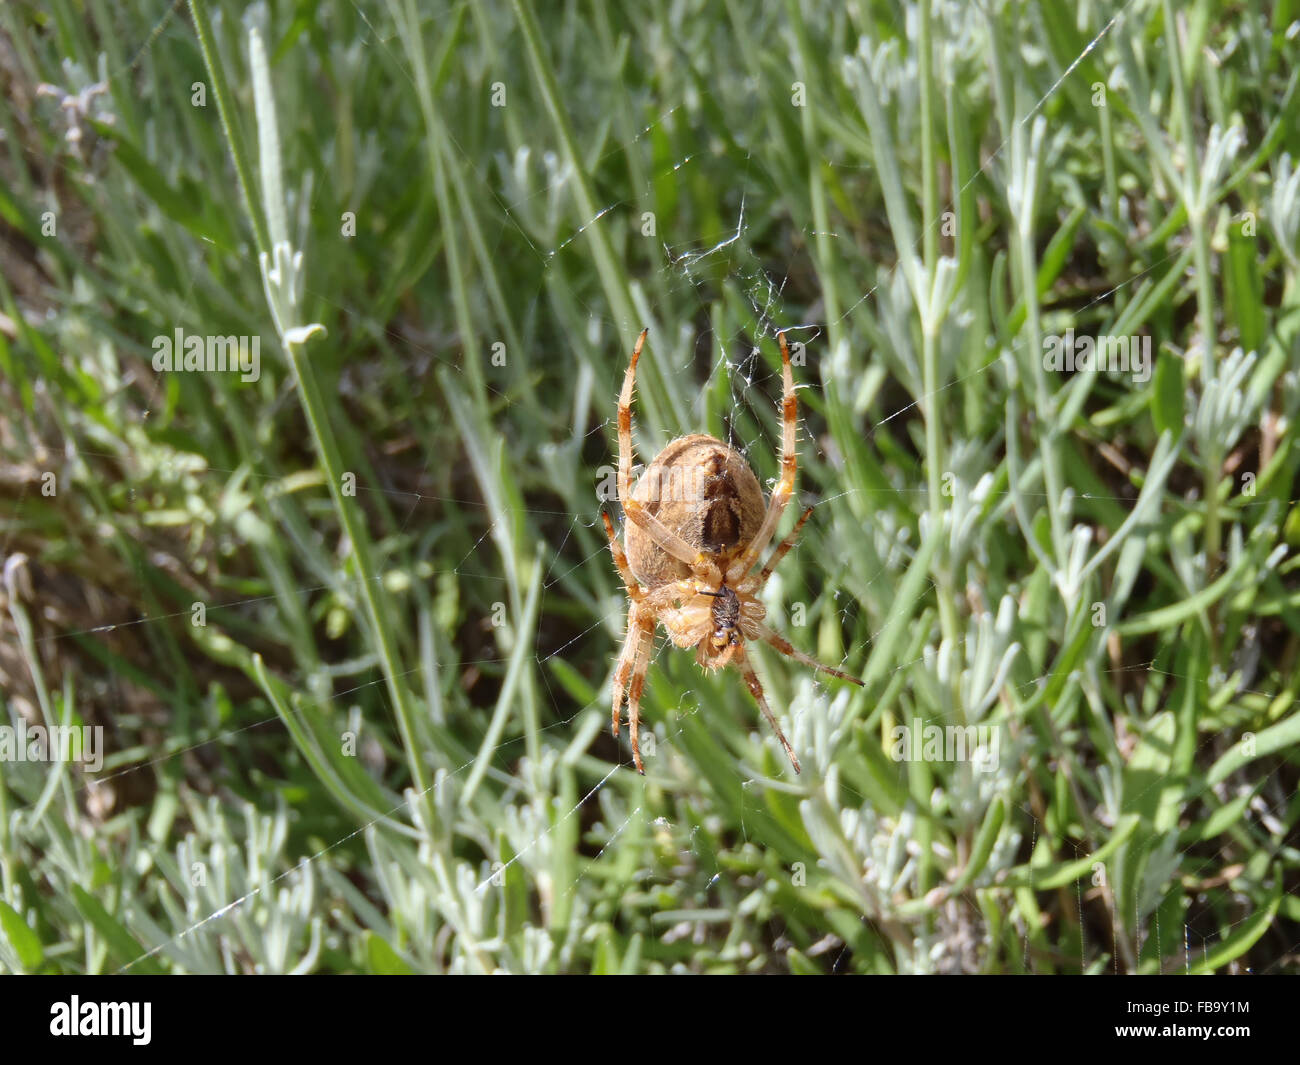 Female European garden spider (Araneus diadematus) on web, seen from below, amongst lavender (Lavandula 'Hidcote') Stock Photo